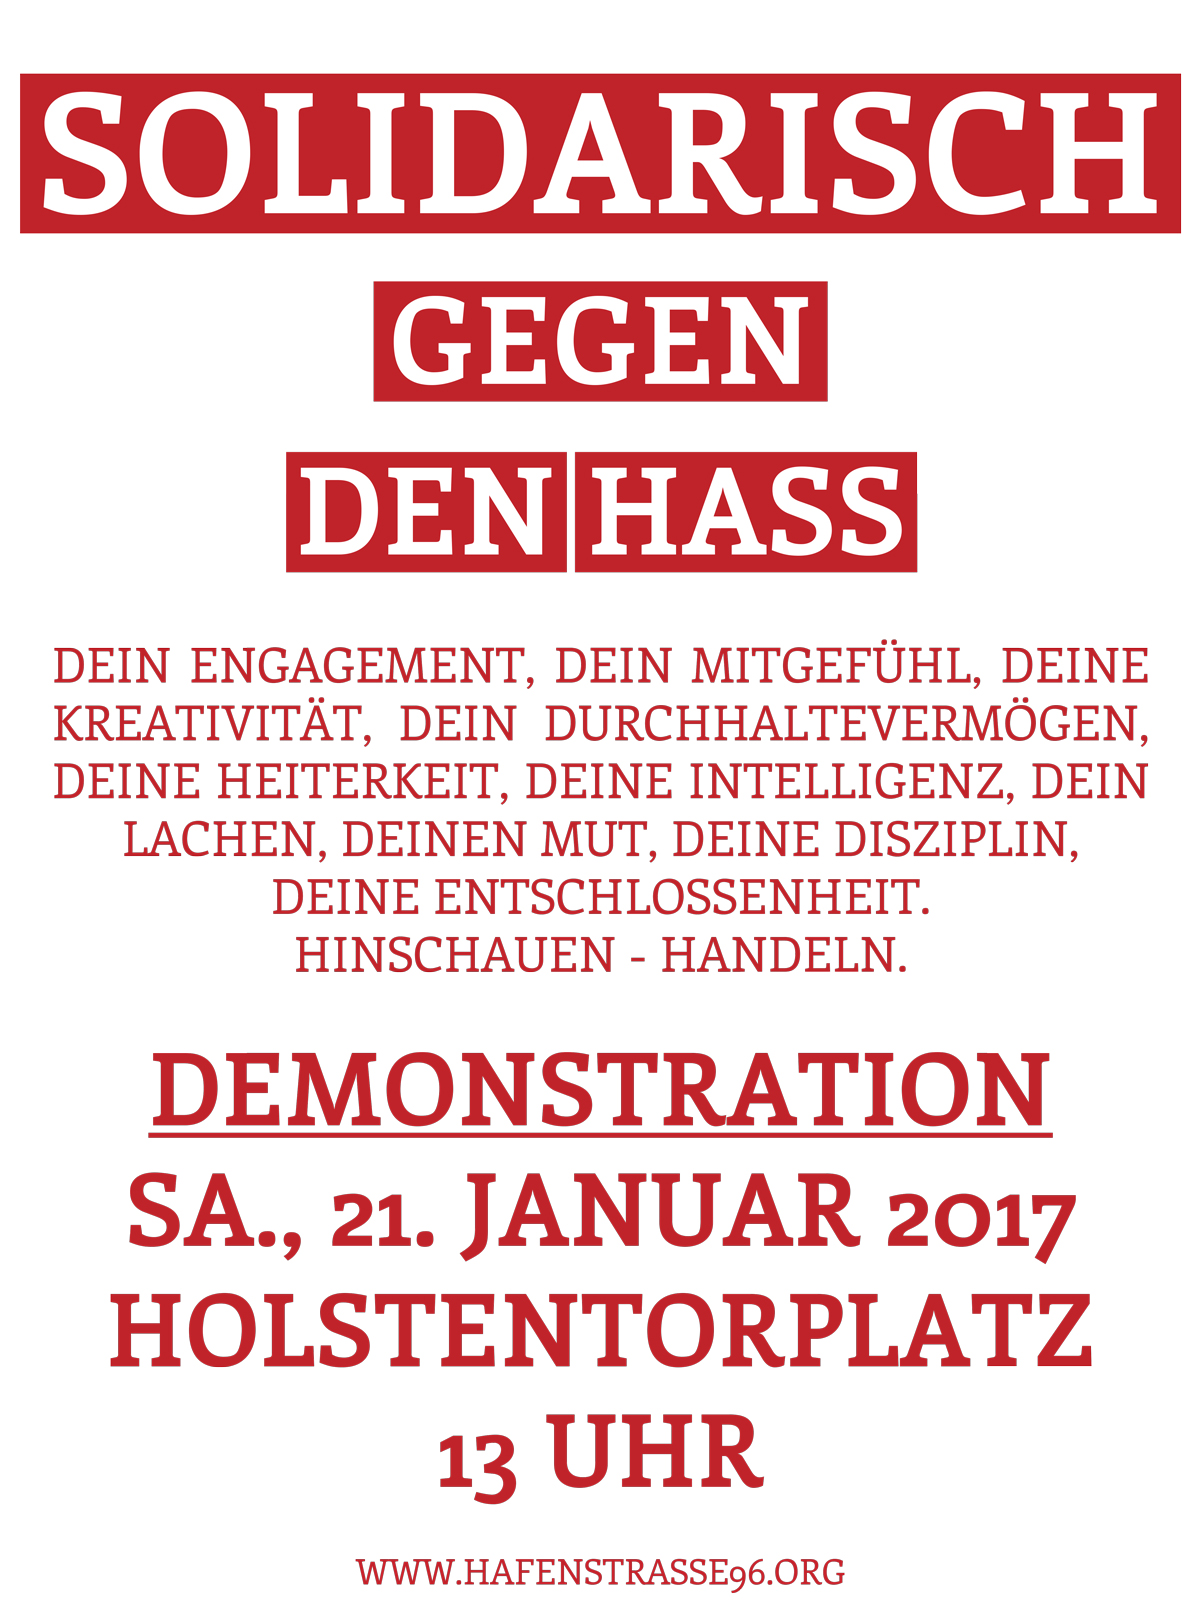 http://hafenstrasse96.org/wp-content/uploads/2017/01/Solidarisch-gegen-den-Hass.jpg